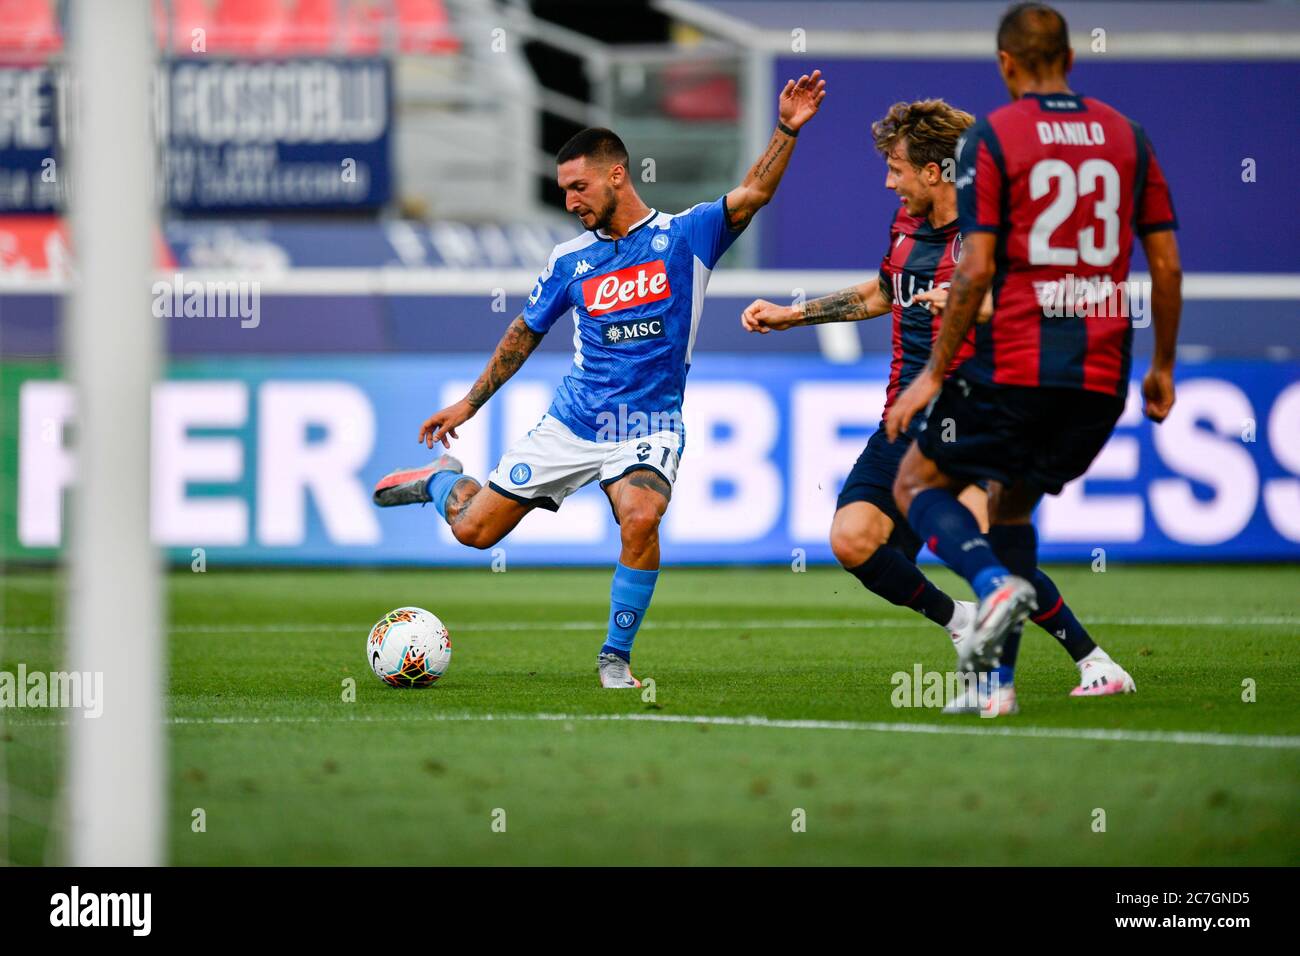 shot of Faouzi Ghoulam (SSC Napoli) during Bologna vs Napoli, italian Serie A soccer match, Bologna, Italy, 15 Jul 2020 Stock Photo